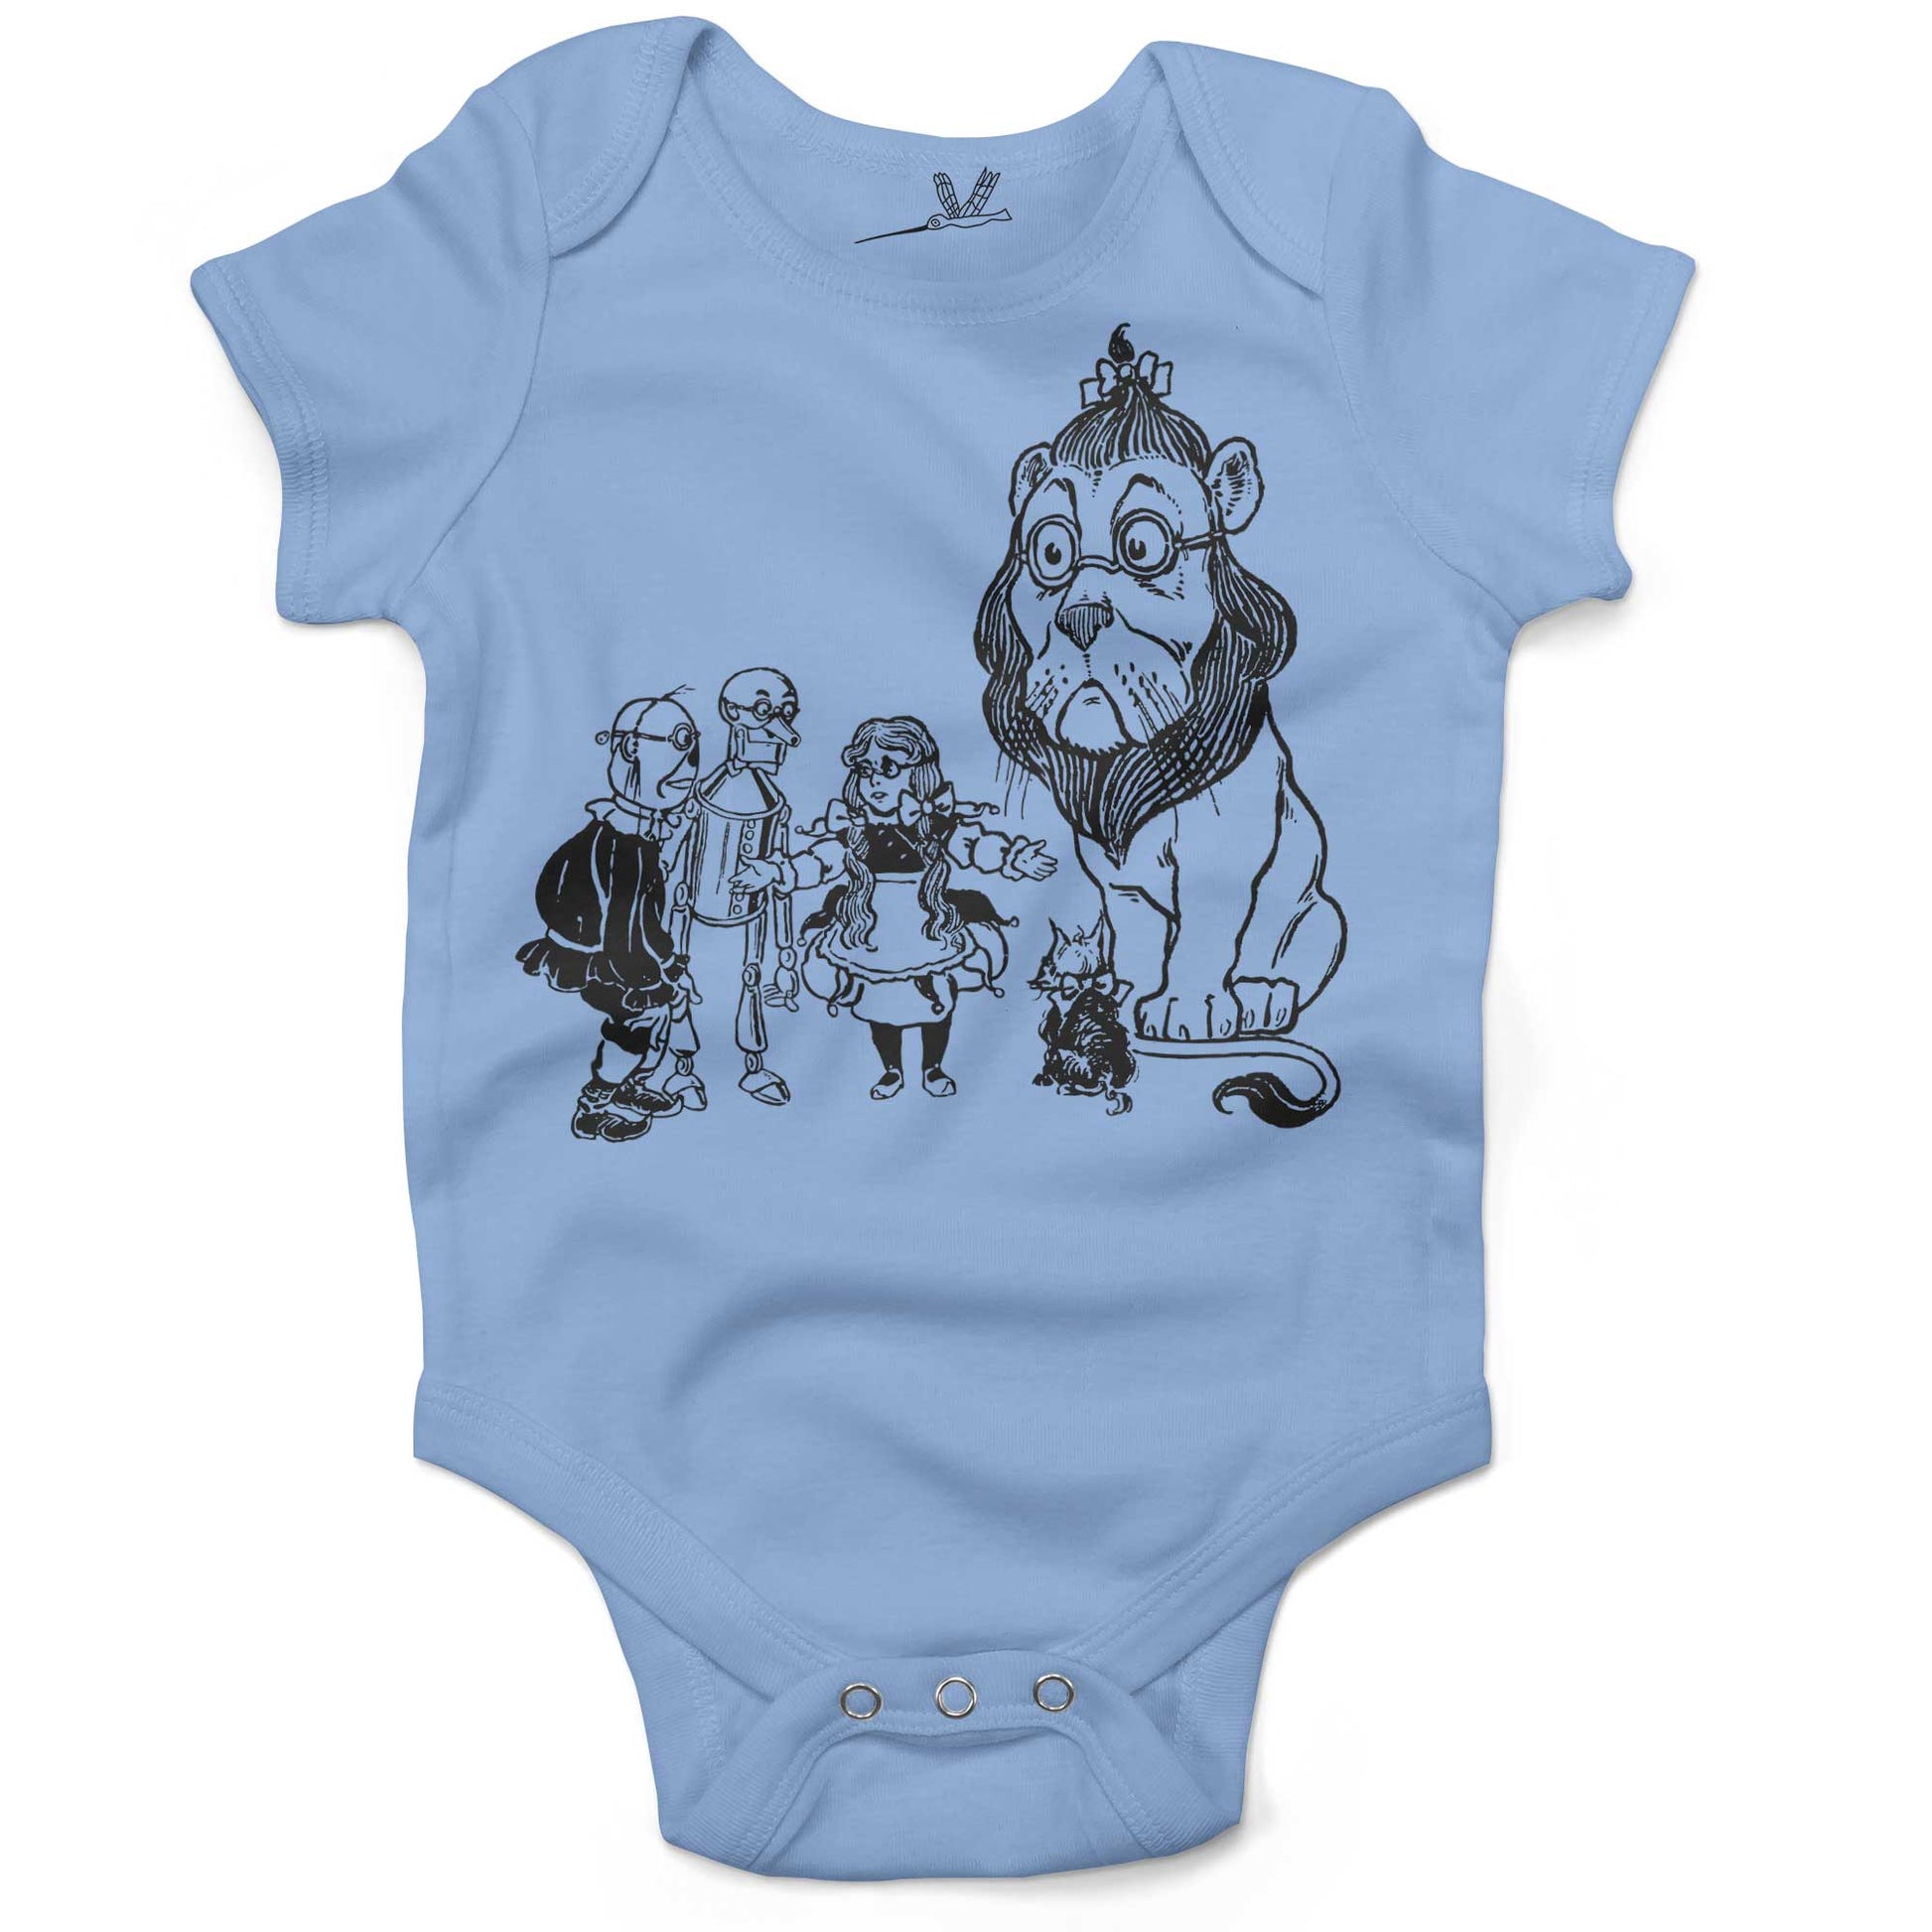 Wizard Of Oz Infant Bodysuit-Organic Baby Blue-3-6 months